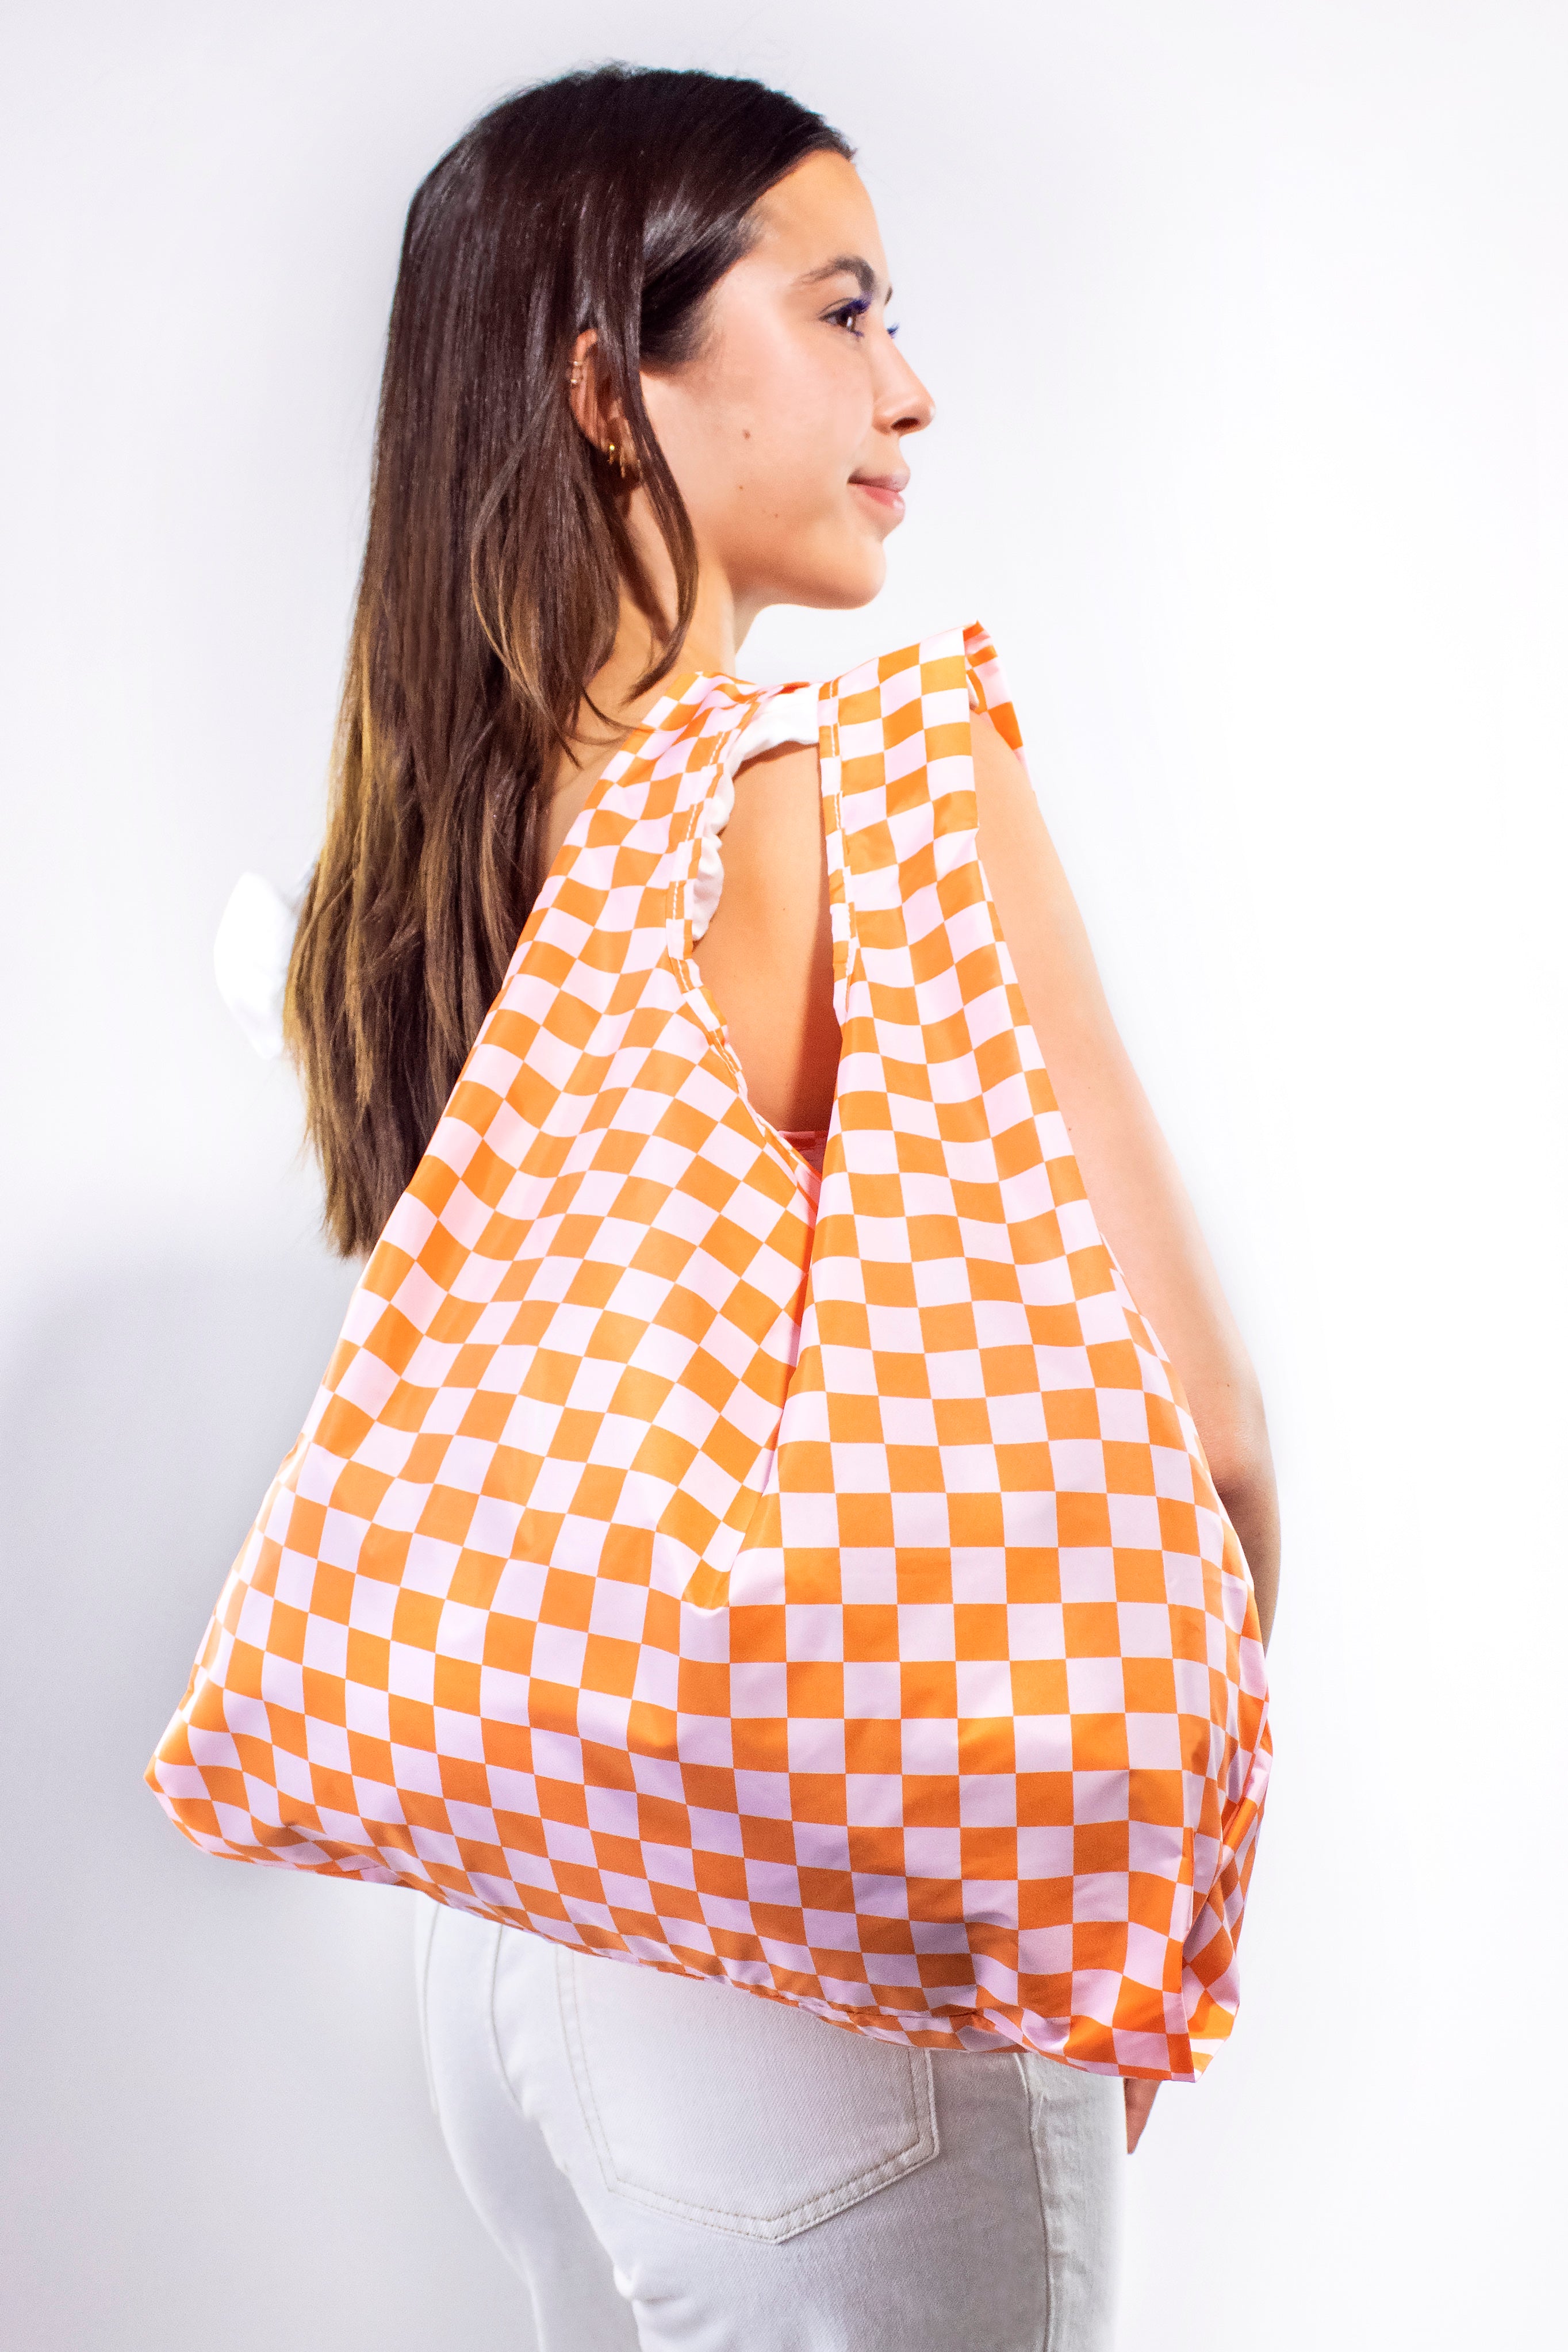 Pink / Orange Checkerboard Reusable Bag - medium